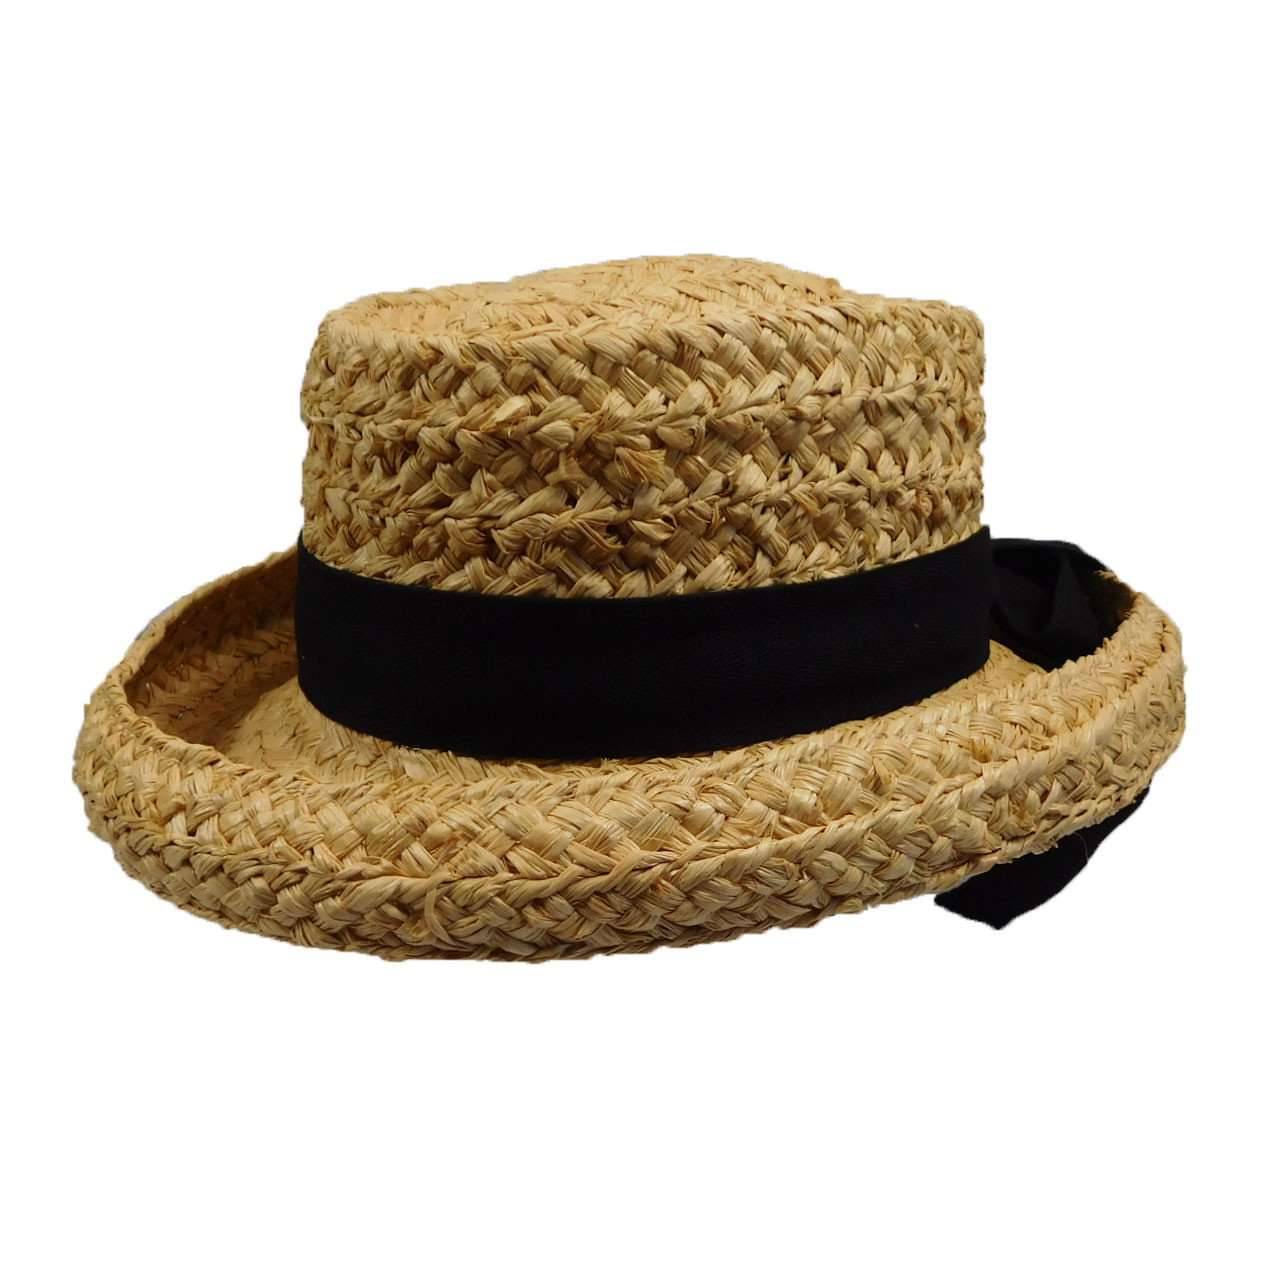 Curled Brim Raffia Hat, Petite - Scala Hats Kettle Brim Hat Scala Hats WSlr1980NT-P Natural  